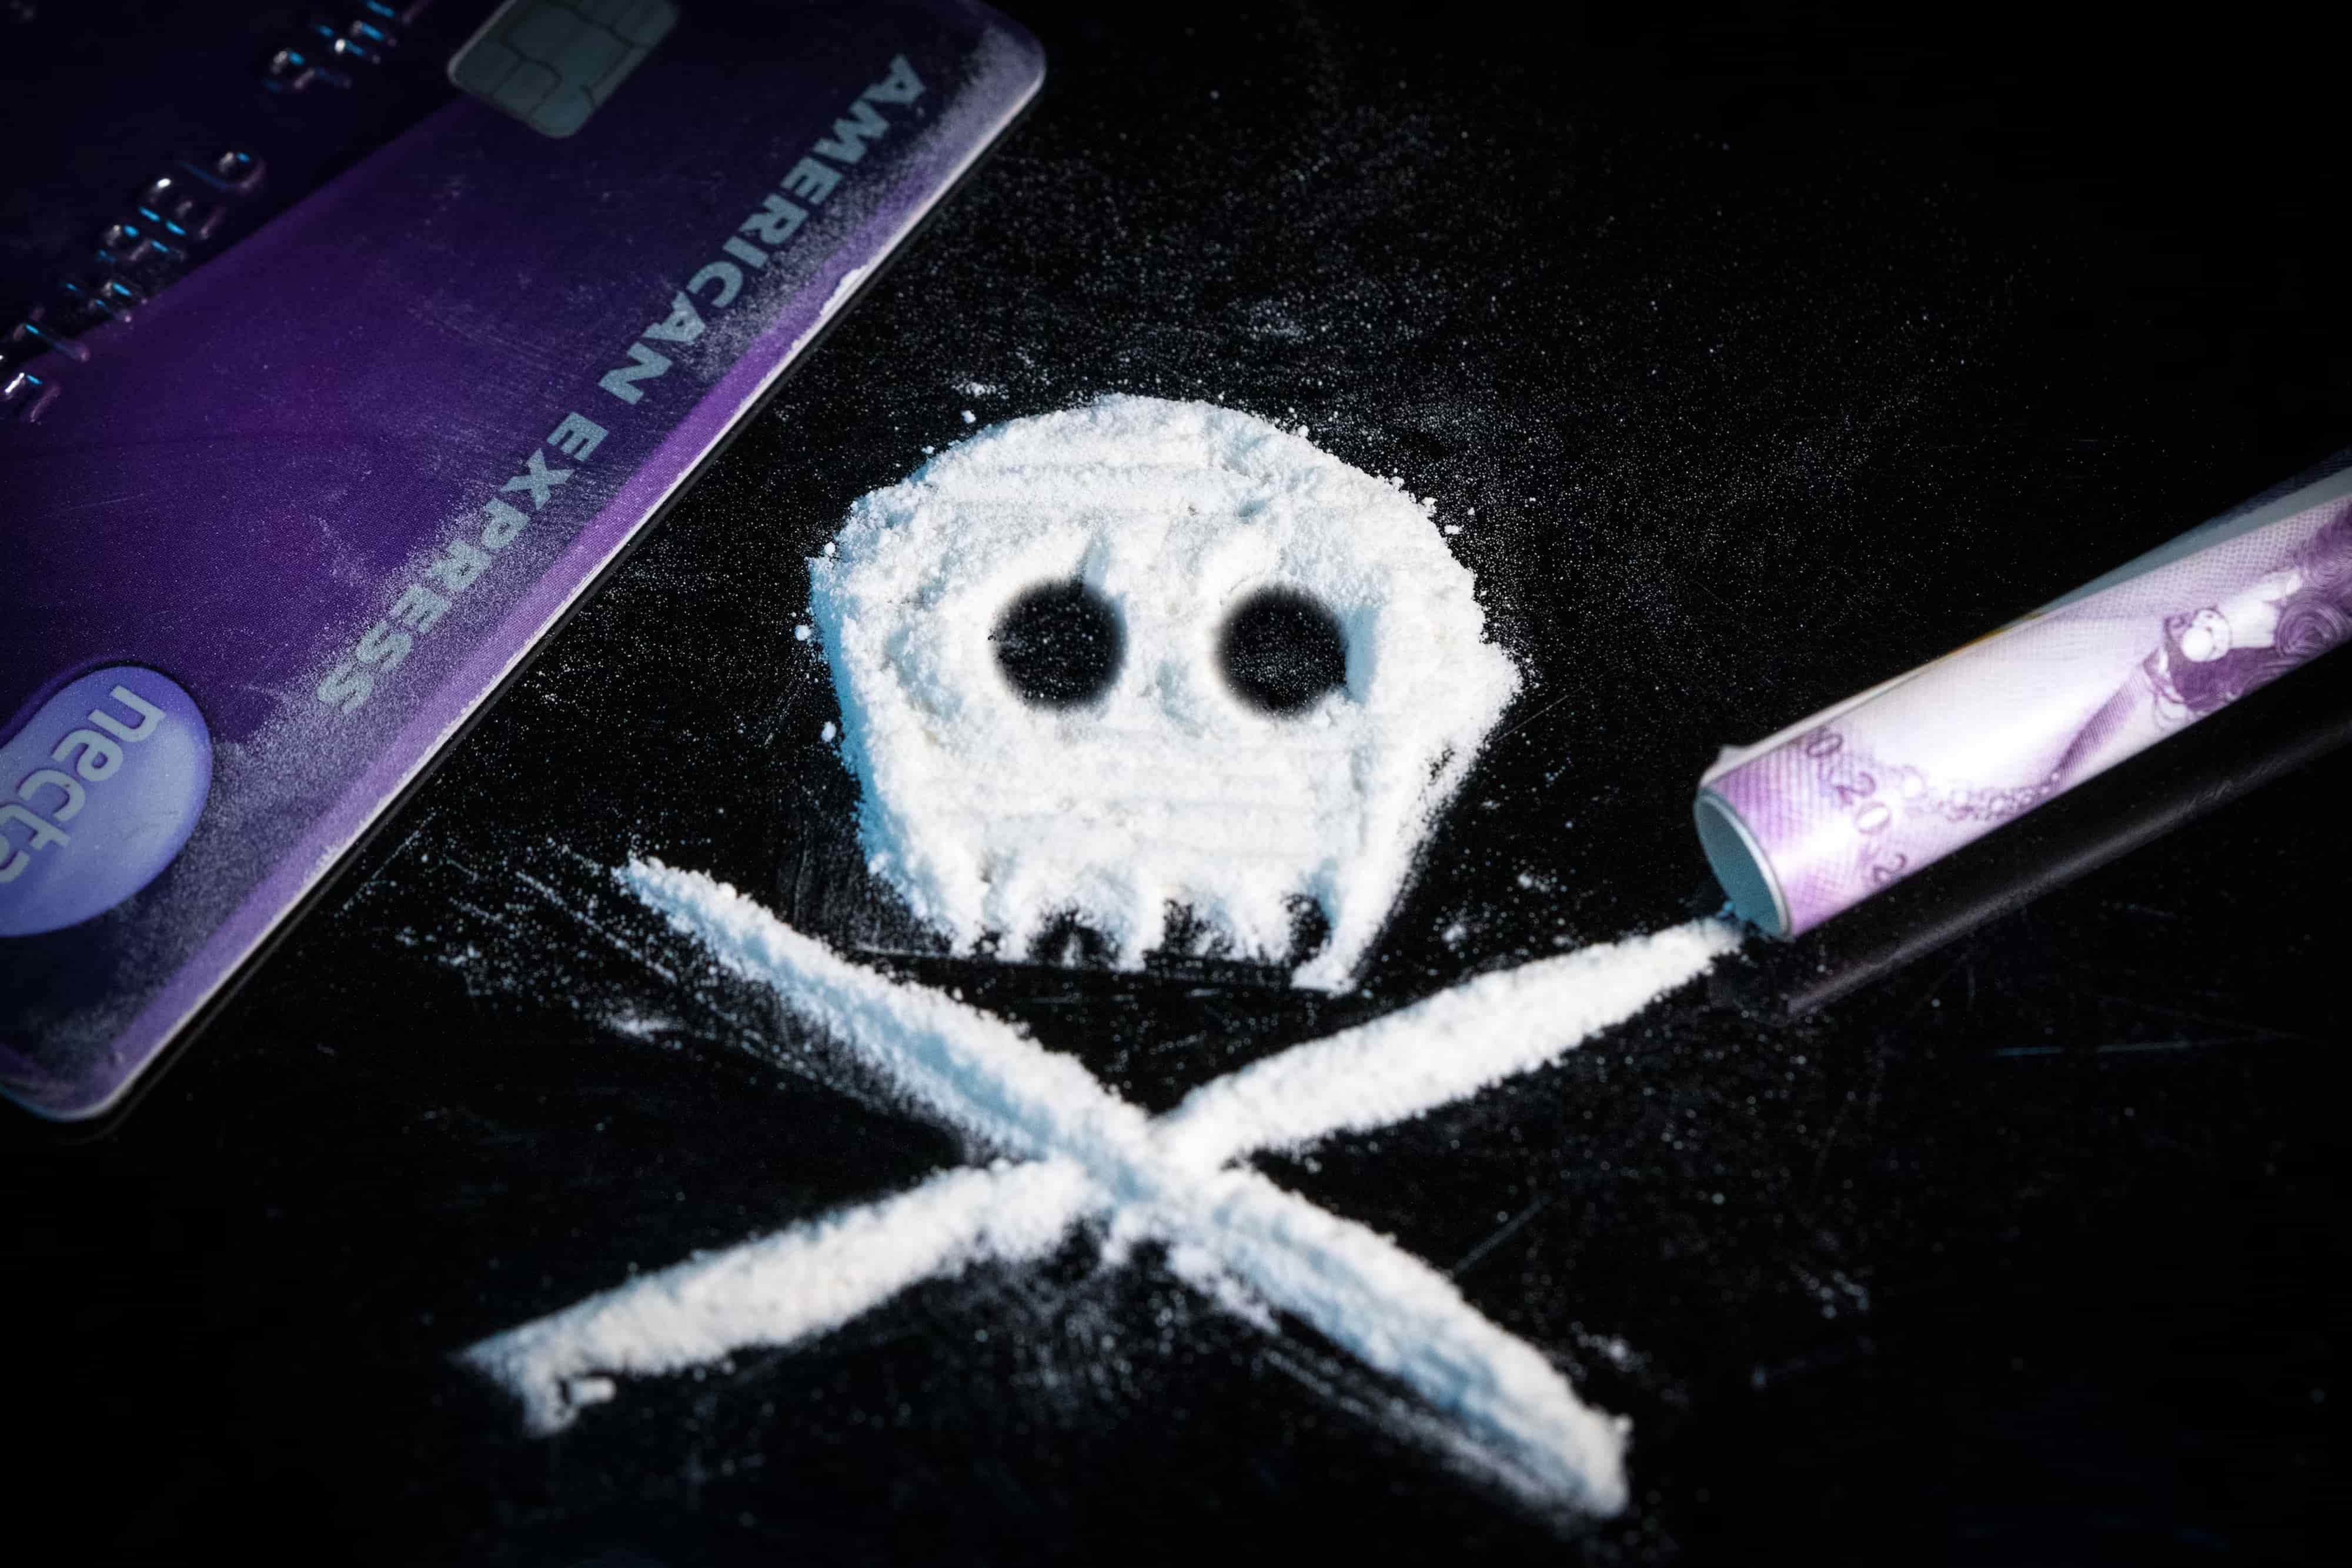 UN: Colombia Sets New Cocaine Production Record